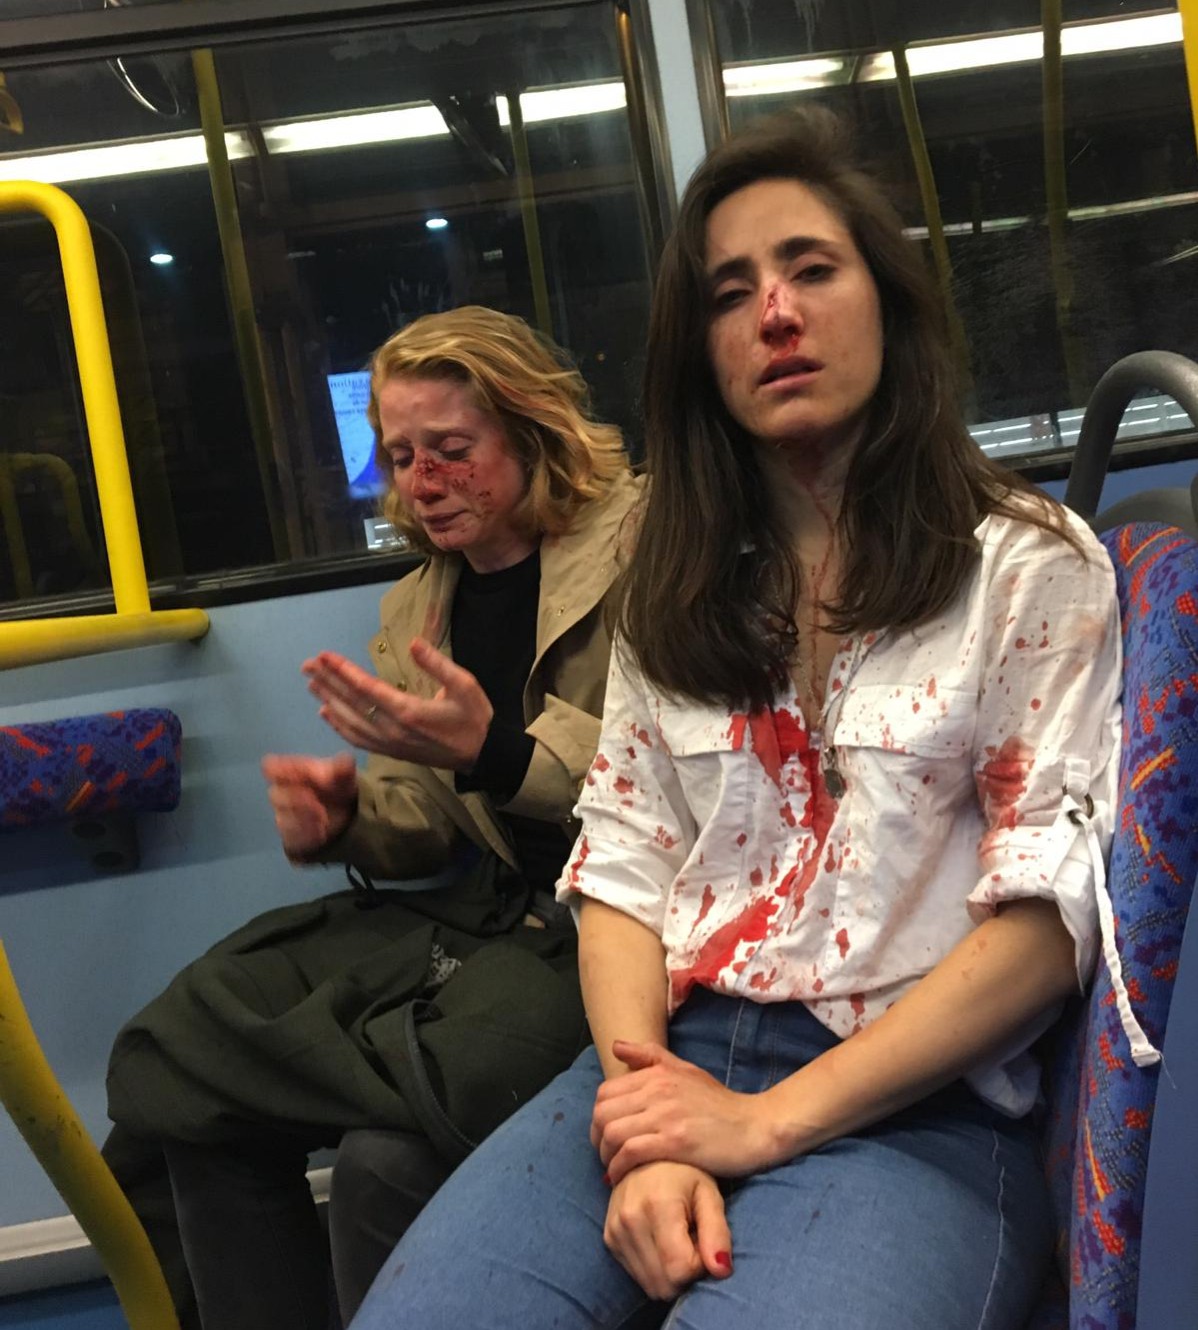 Lesbian couple Melania Geymonat and girlfriend Chris beaten in homophobic attack on London bus